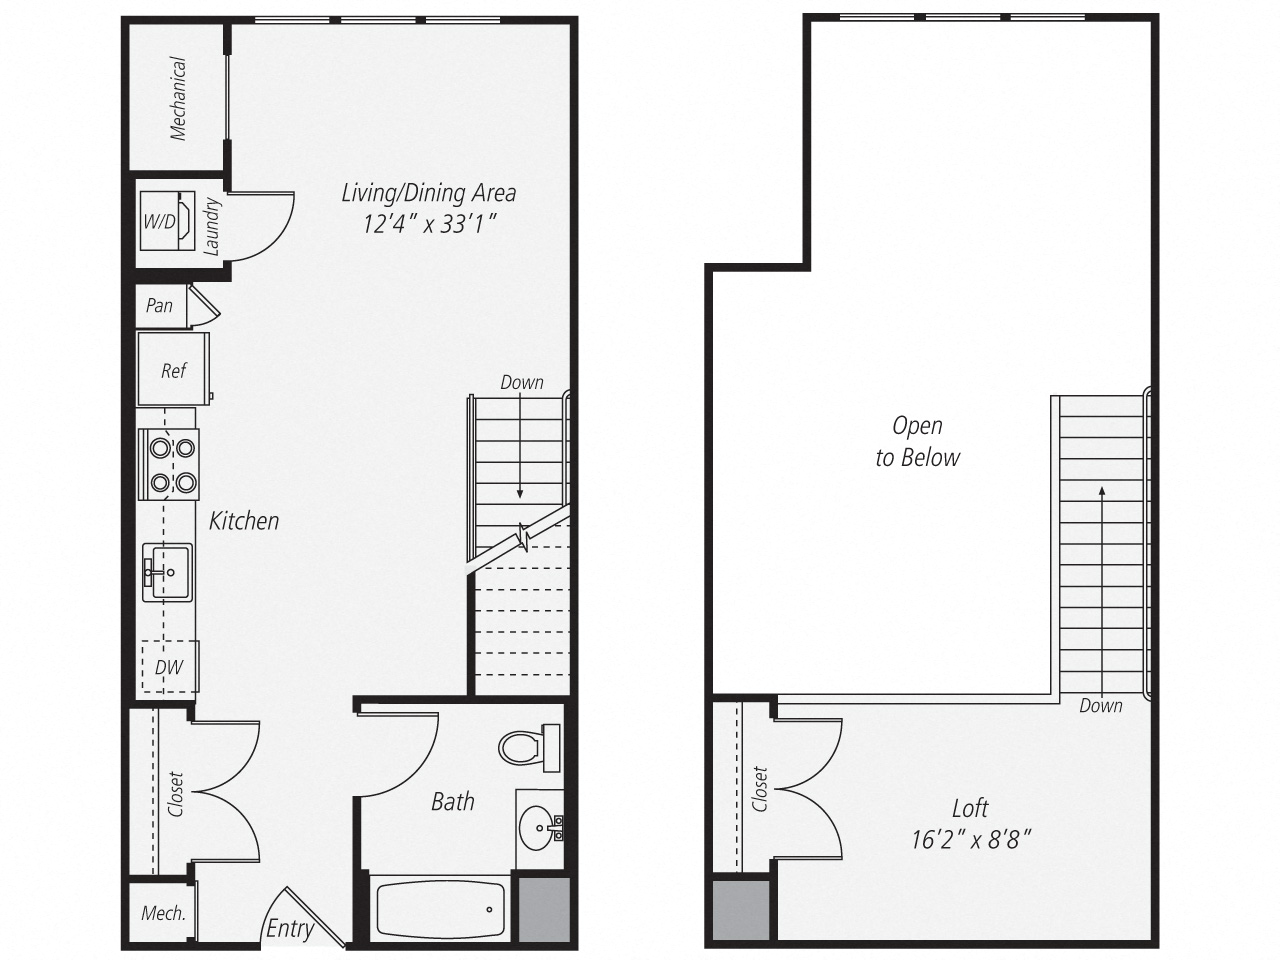 Floorplan for Apartment #432, 0 bedroom unit at Halstead Norwalk